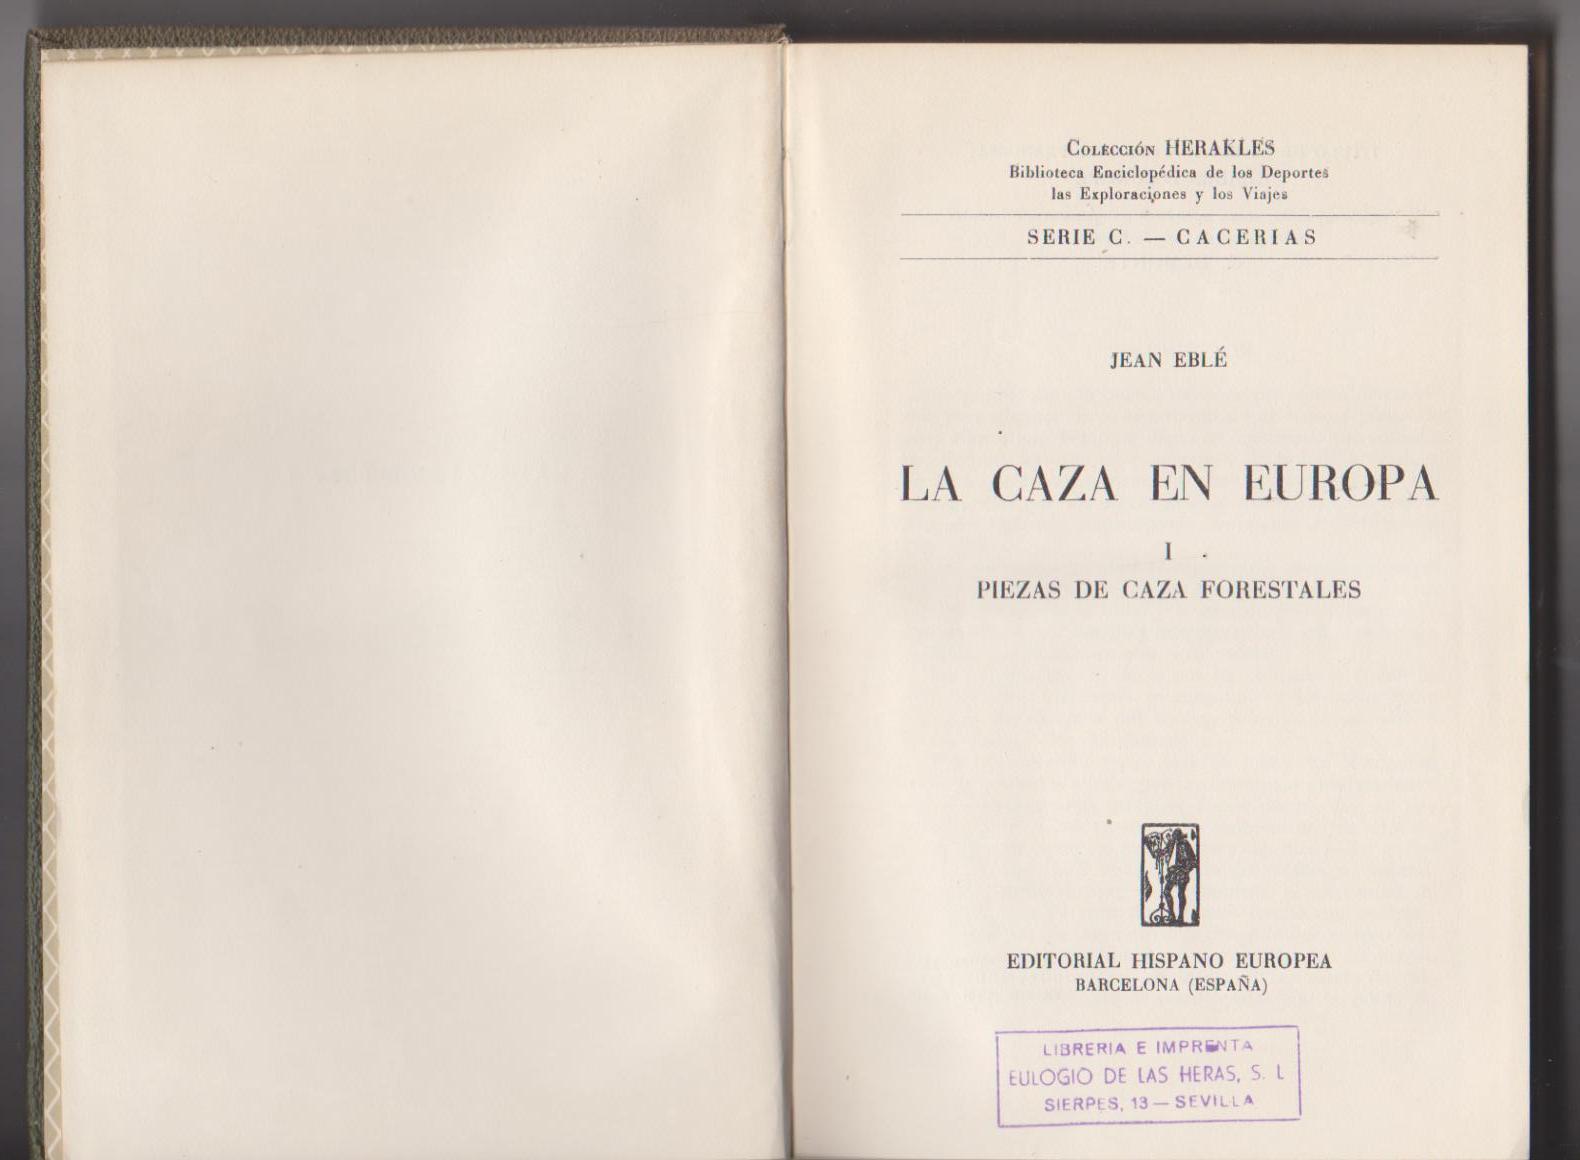 Jean Eblé. La Caza en Europa I. Editorial Hispano Europea 1956